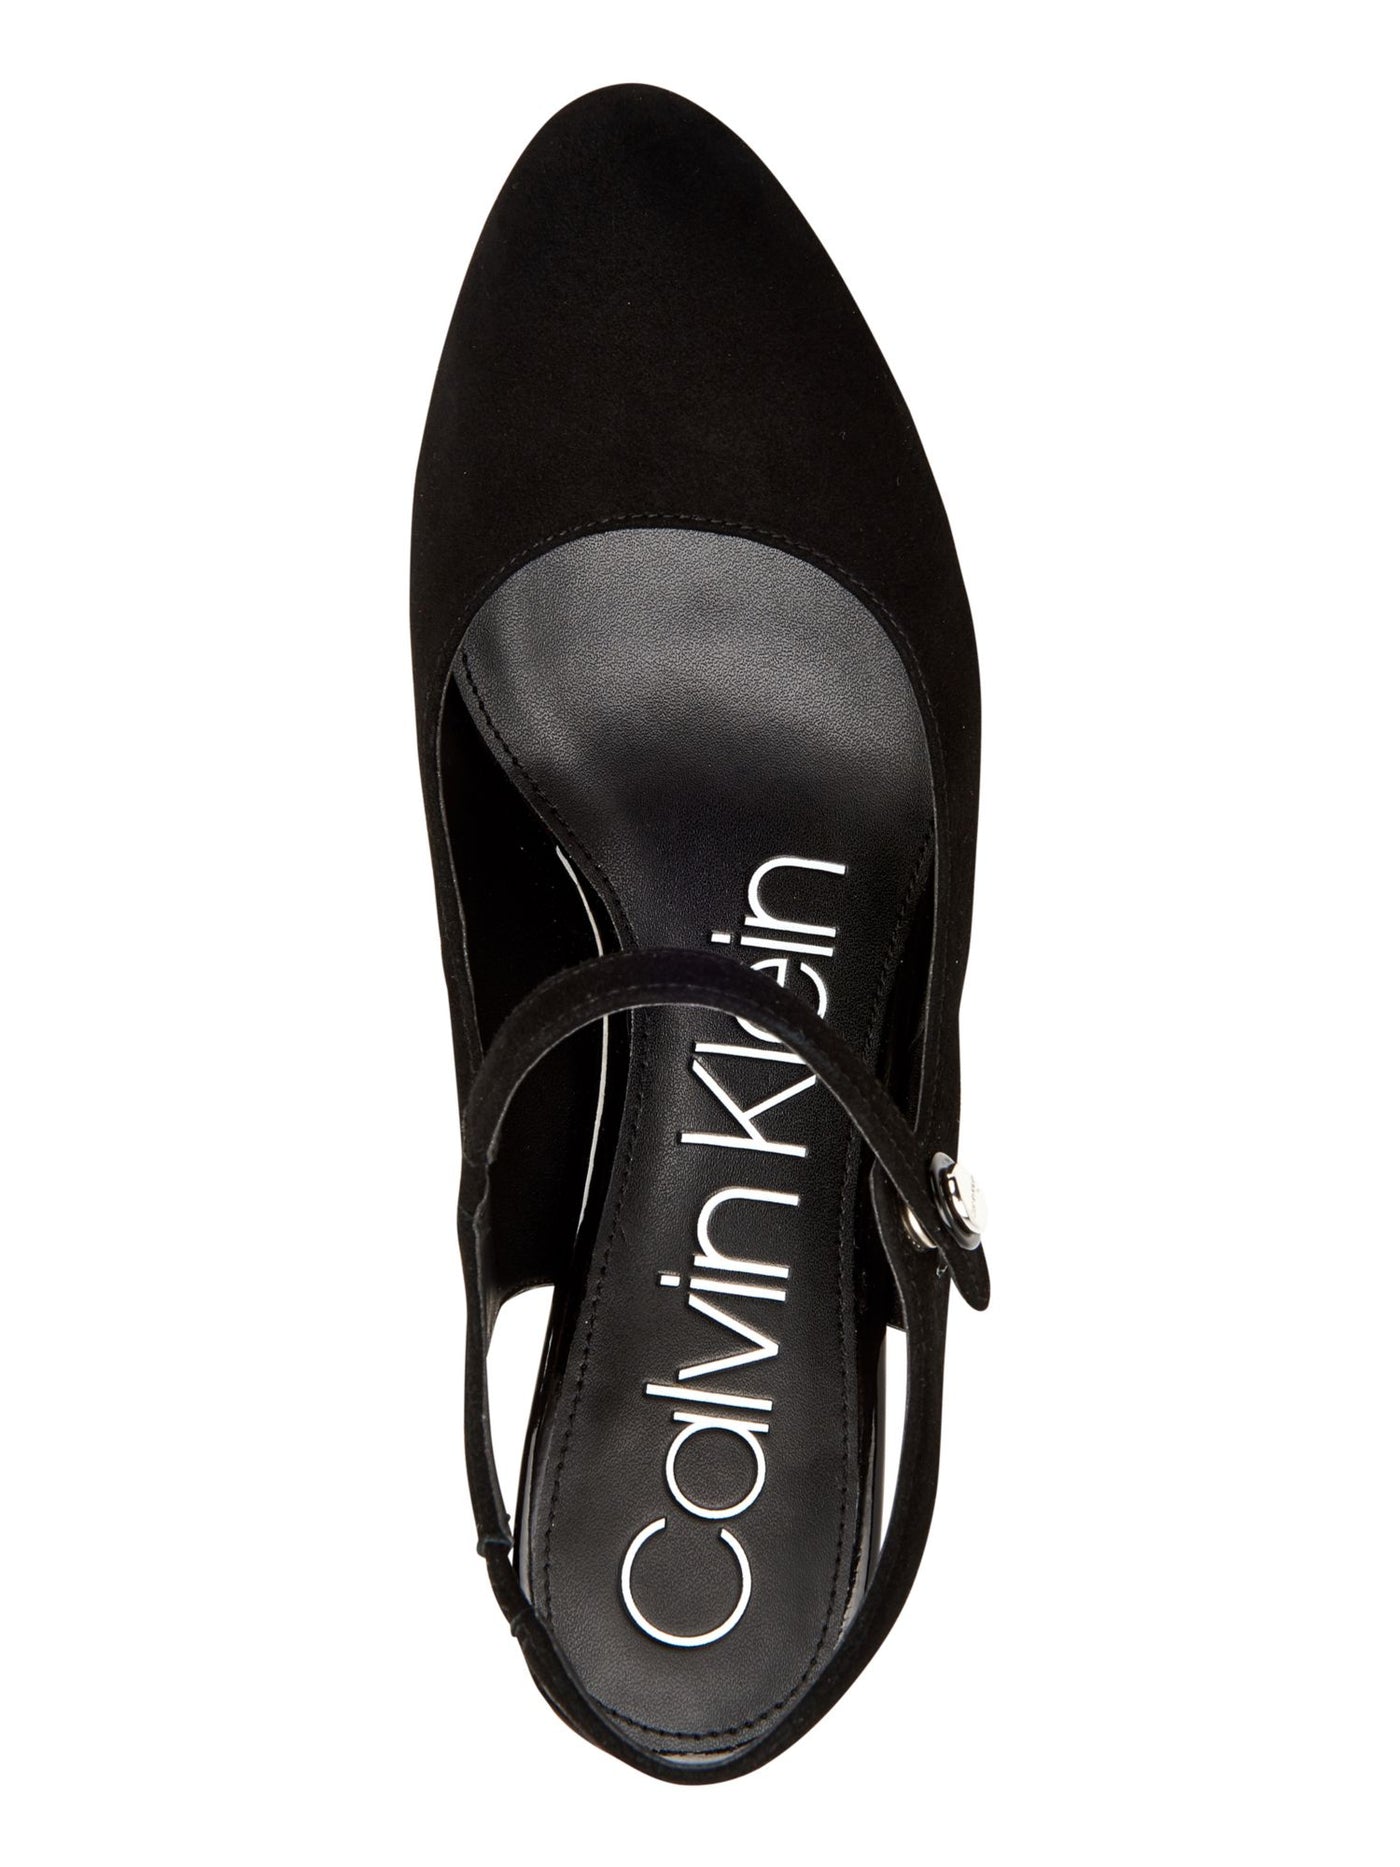 CALVIN KLEIN Womens Black Cushioned Comfort Omaha Almond Toe Block Heel Leather Slingback 7.5 M